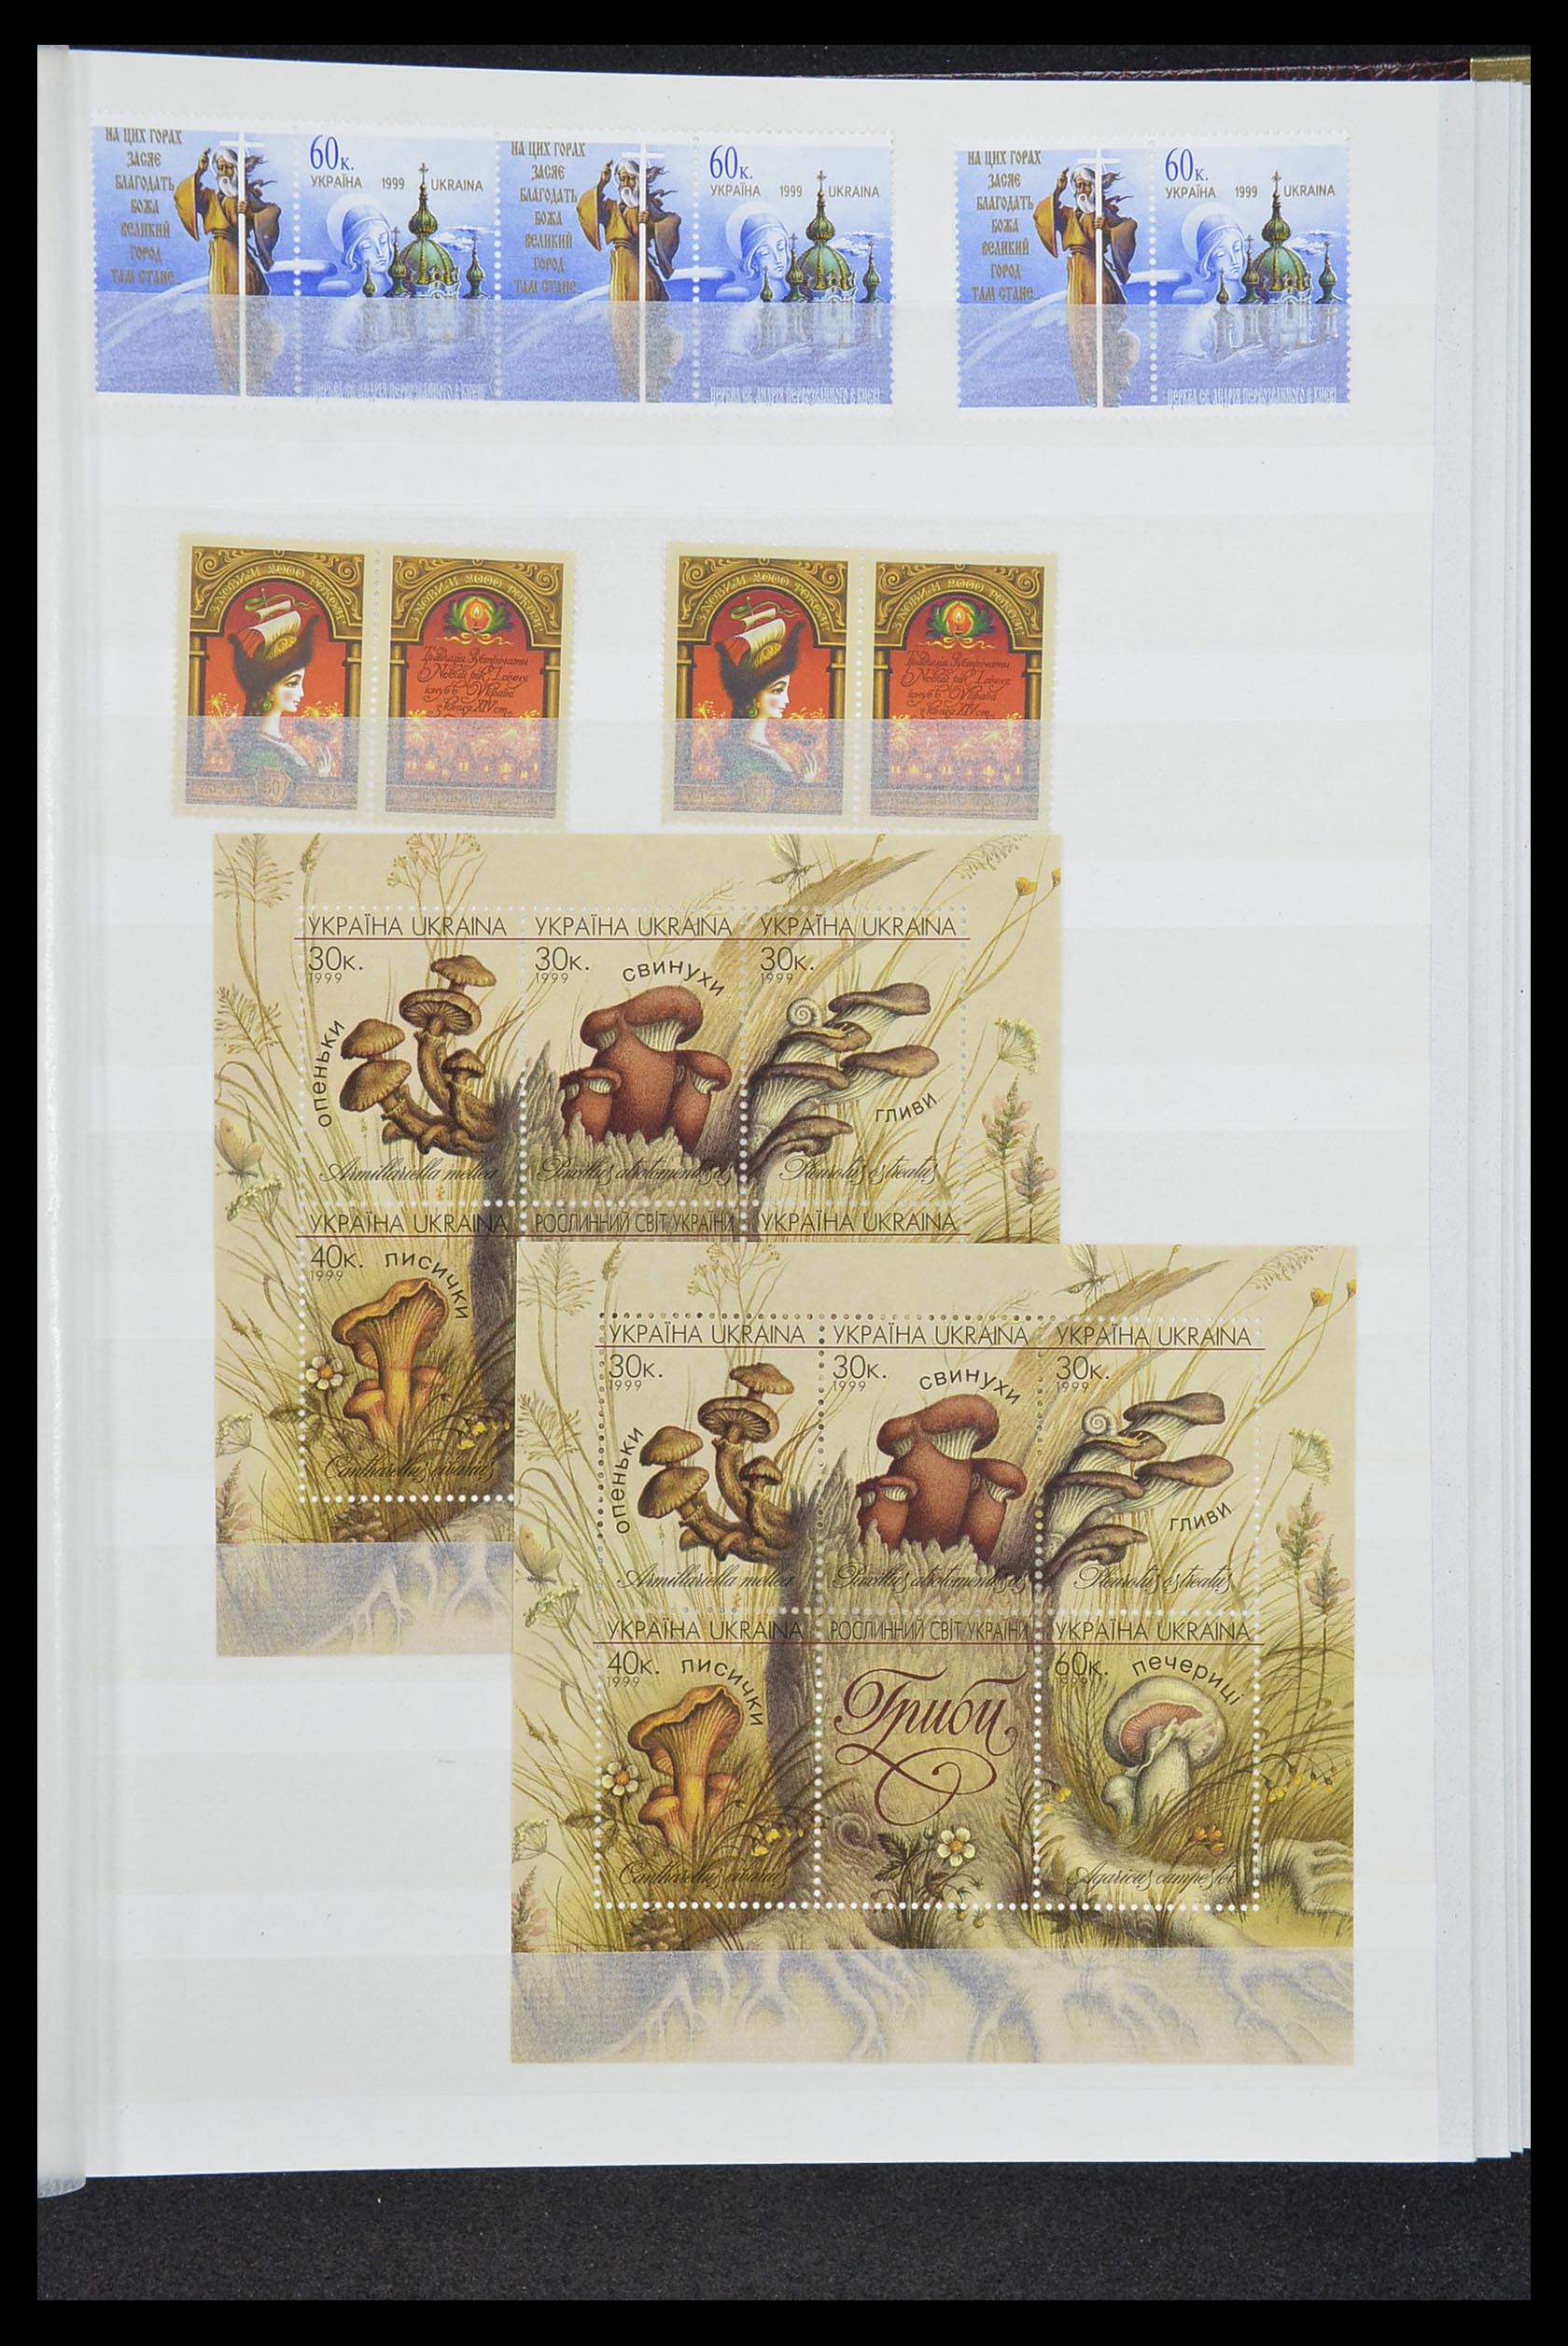 33871 028 - Stamp collection 33871 Ukraine 1919-2009.